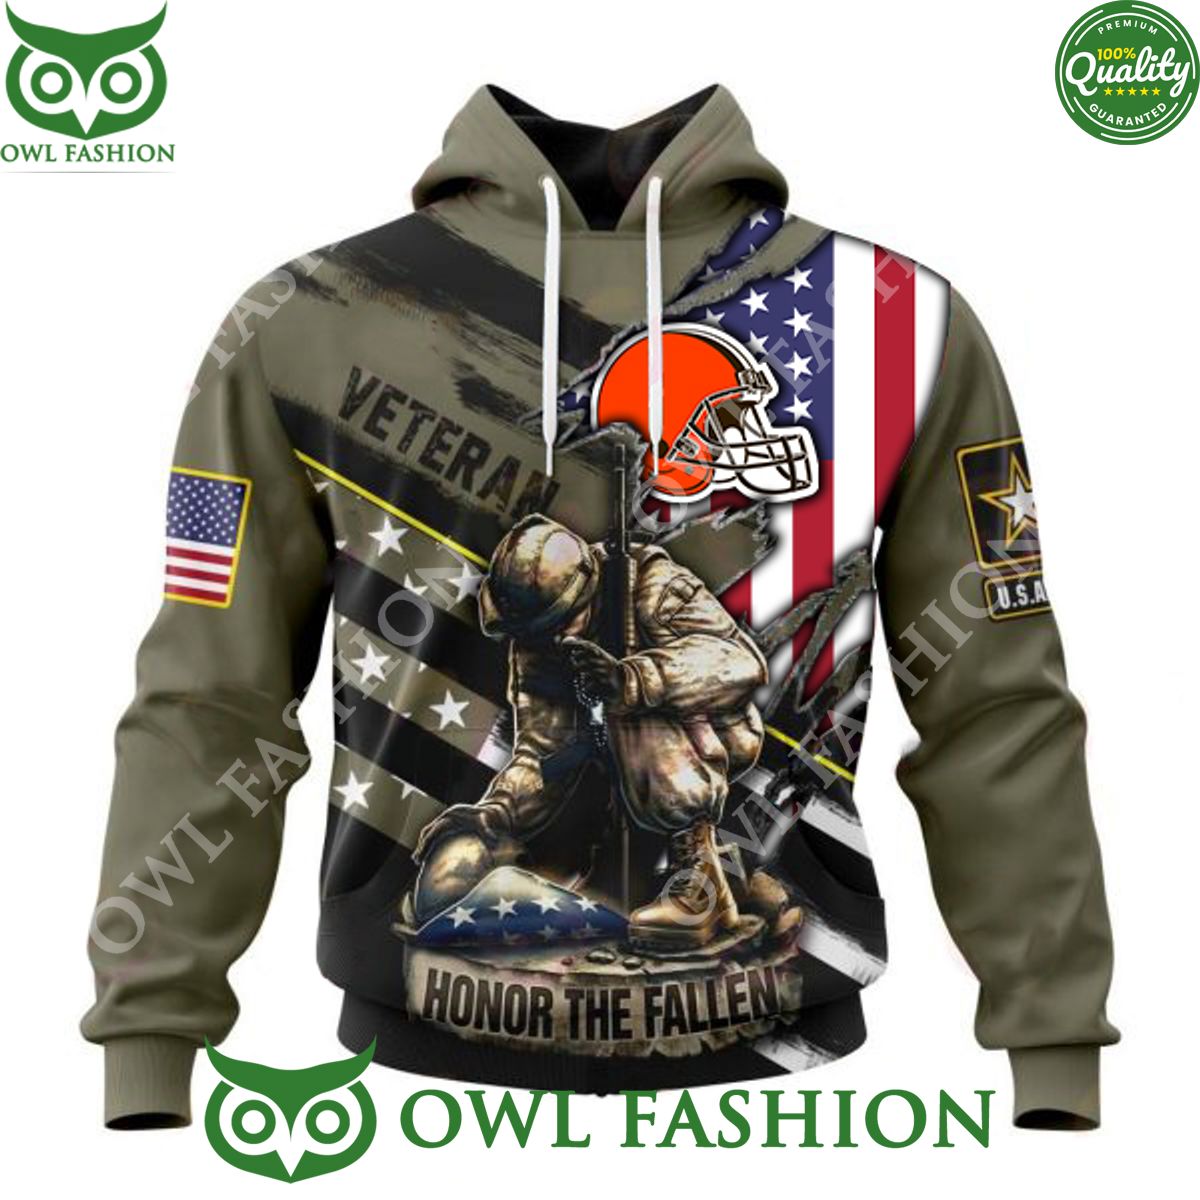 nfl honor veterans and their families cleveland browns 3d hoodie sweatshirt 1 Fzj7Q.jpg